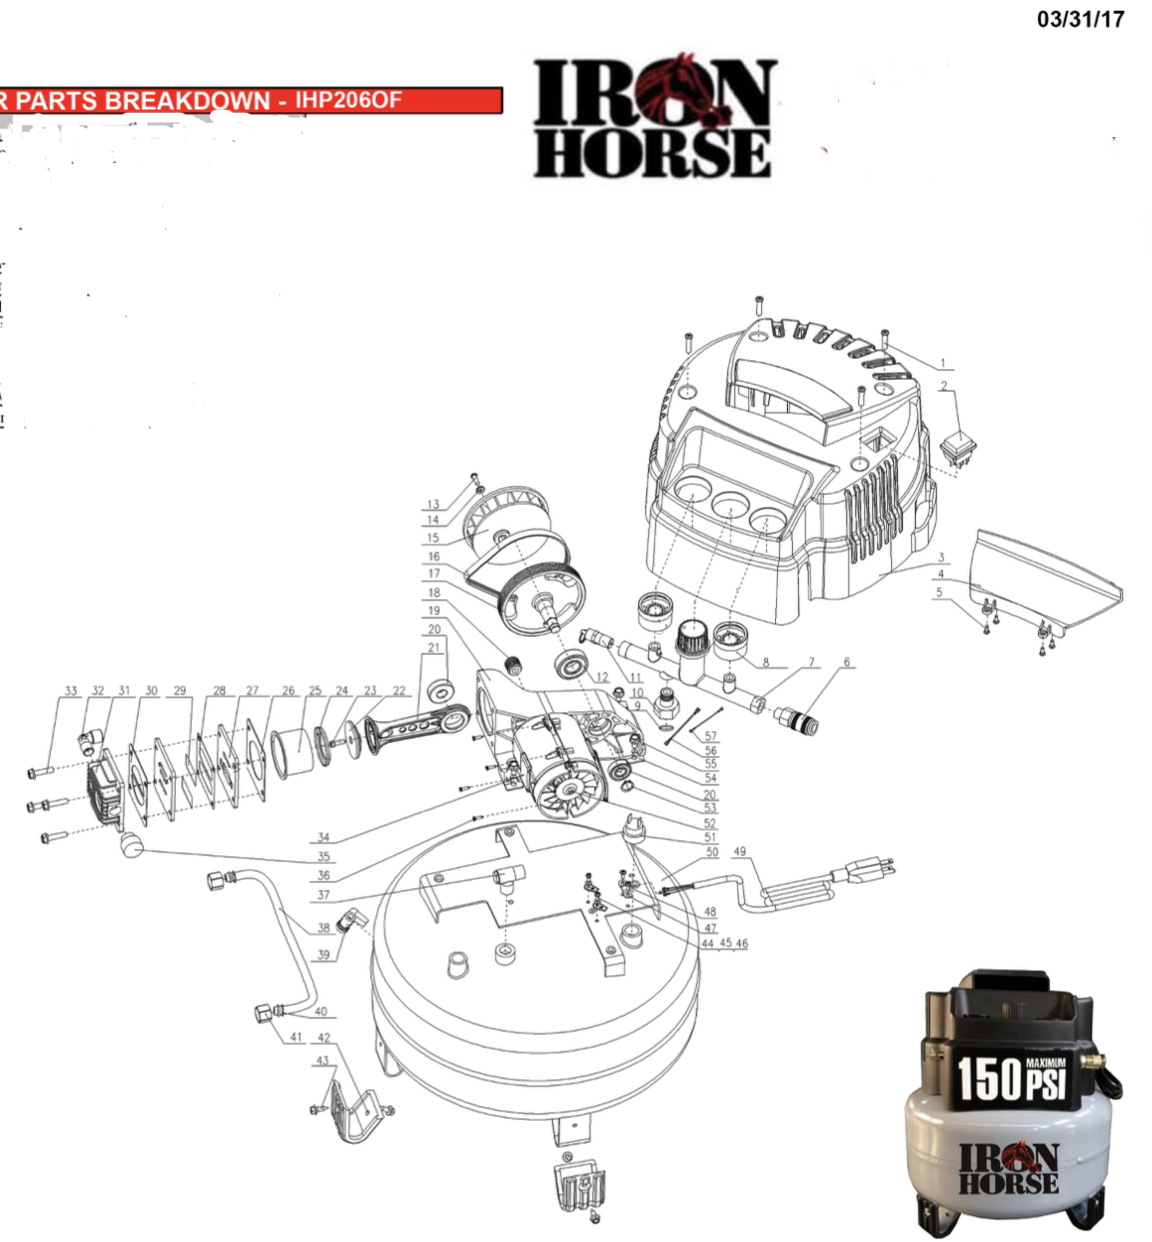 Iron Horse 6 Gallon Air Compressor Pancake Style-iron horse air compressors-Tool Mart Inc.